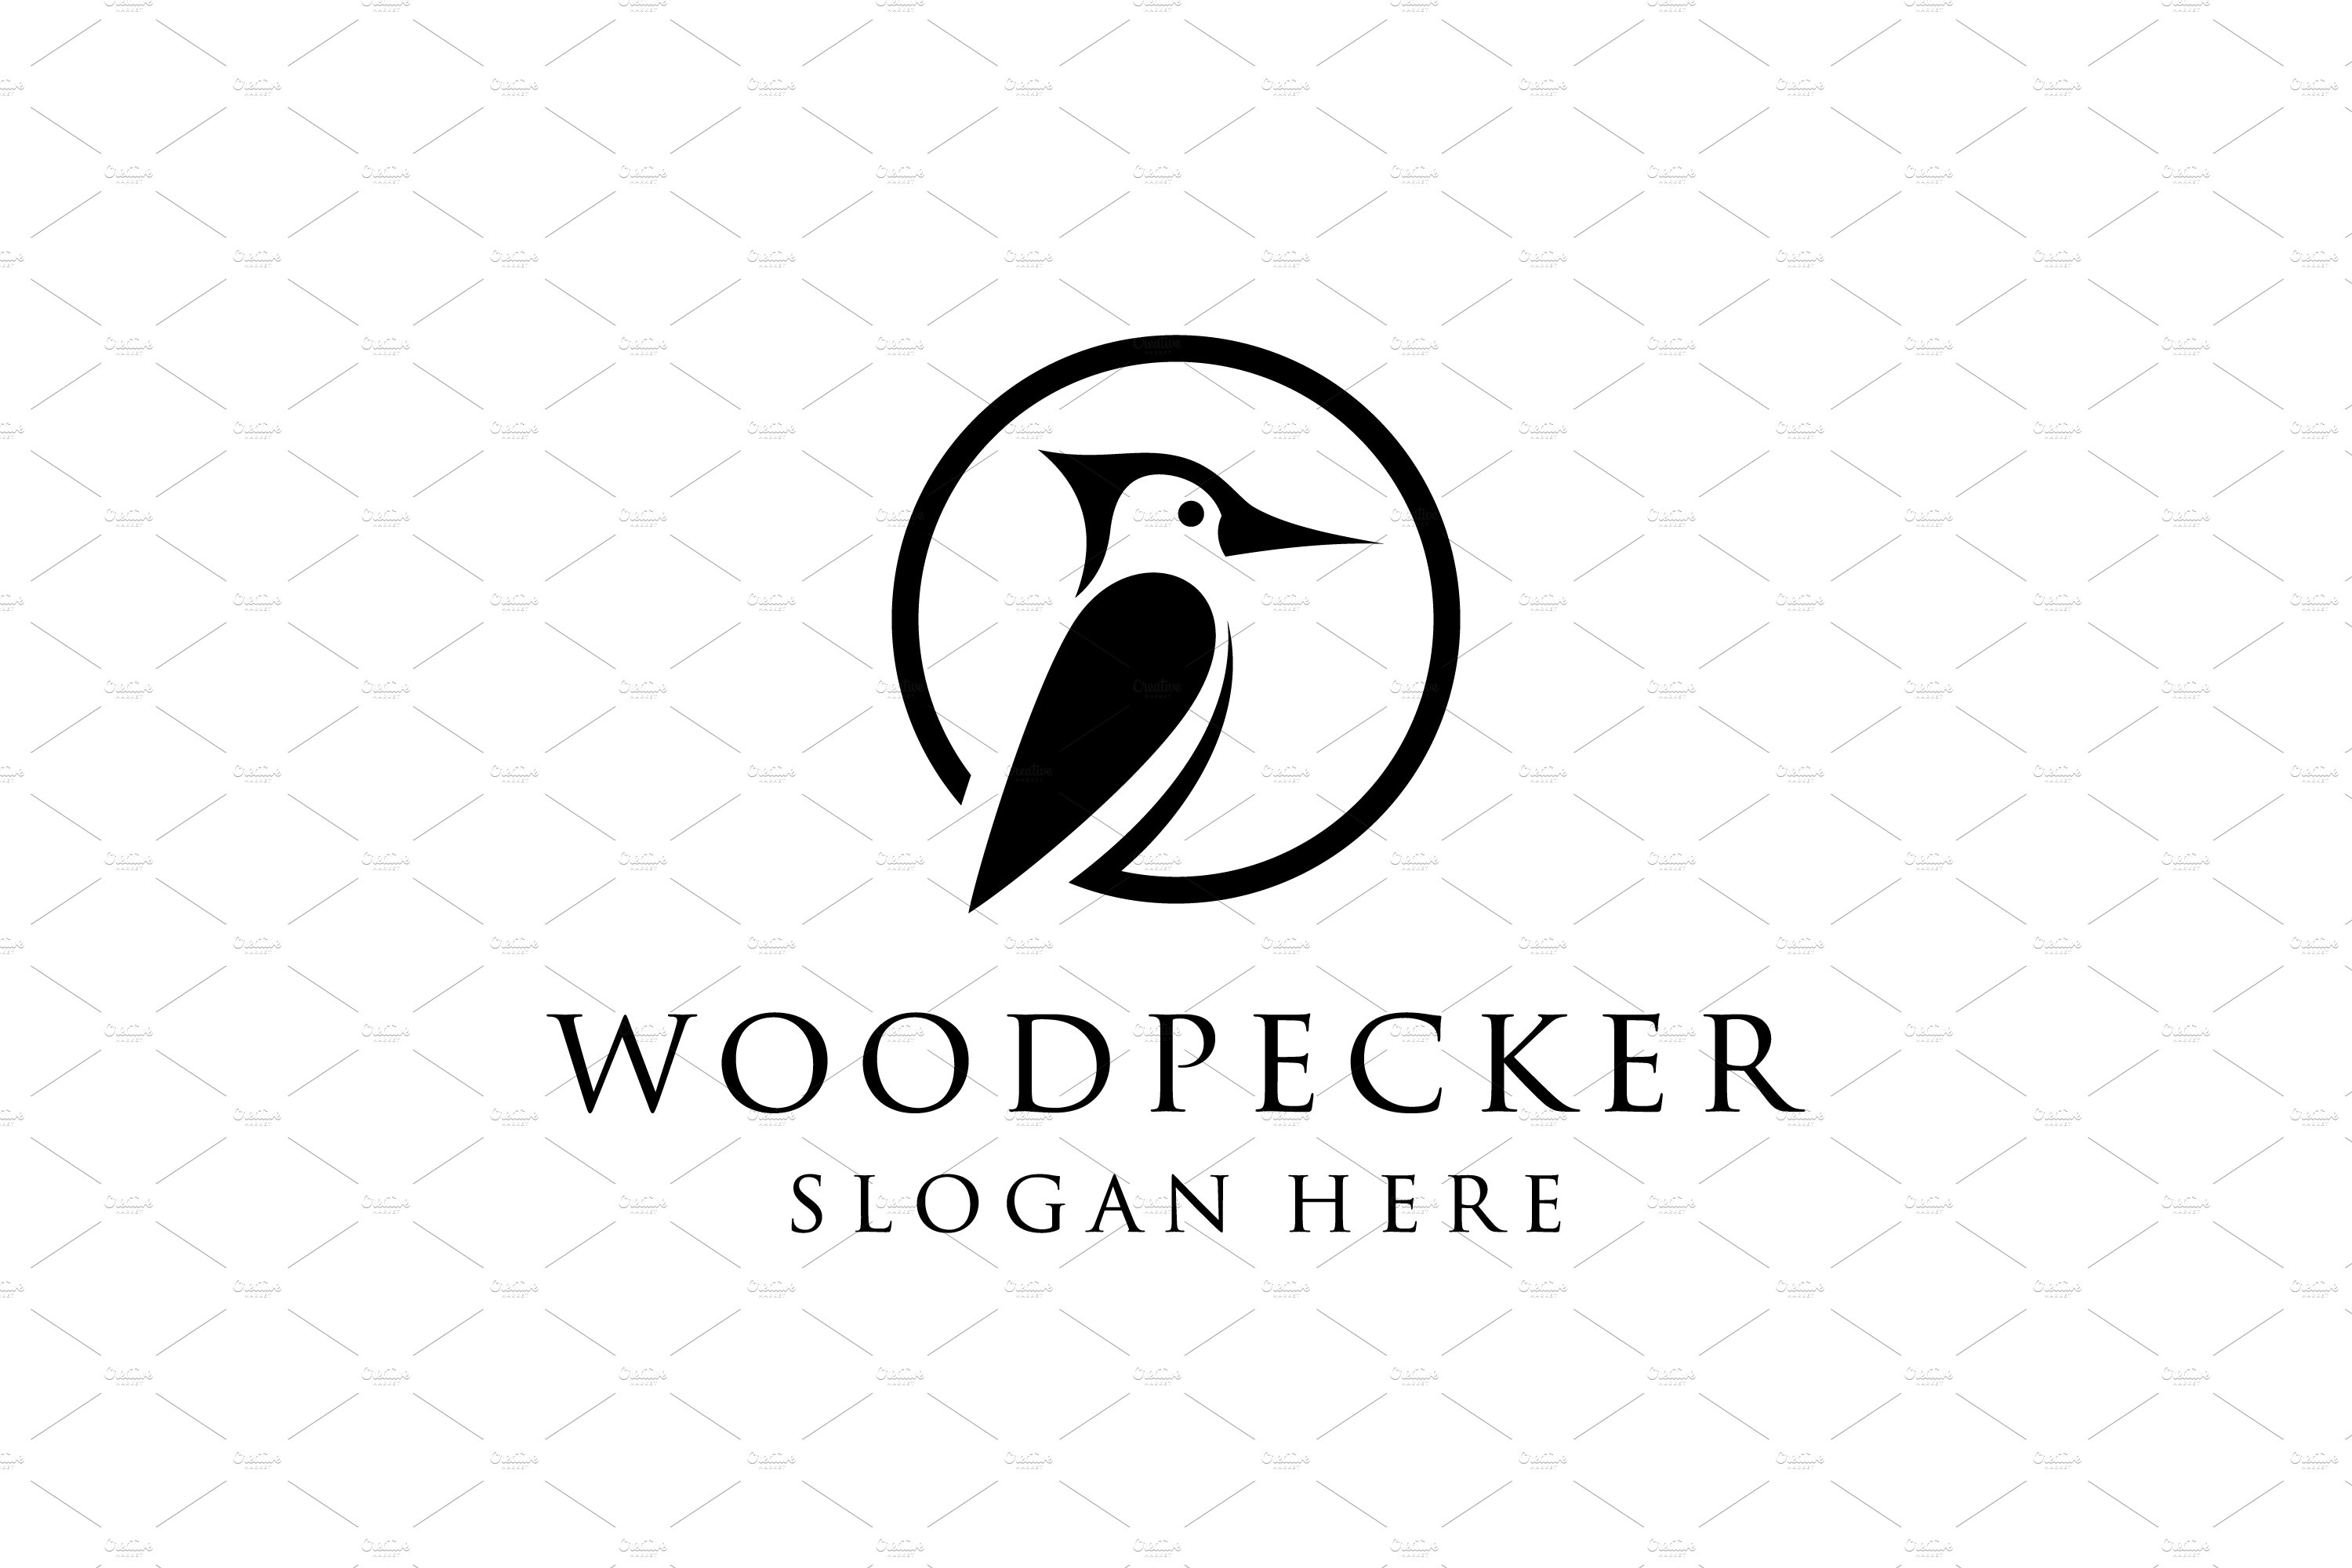 Woodpecker Logo cover image.